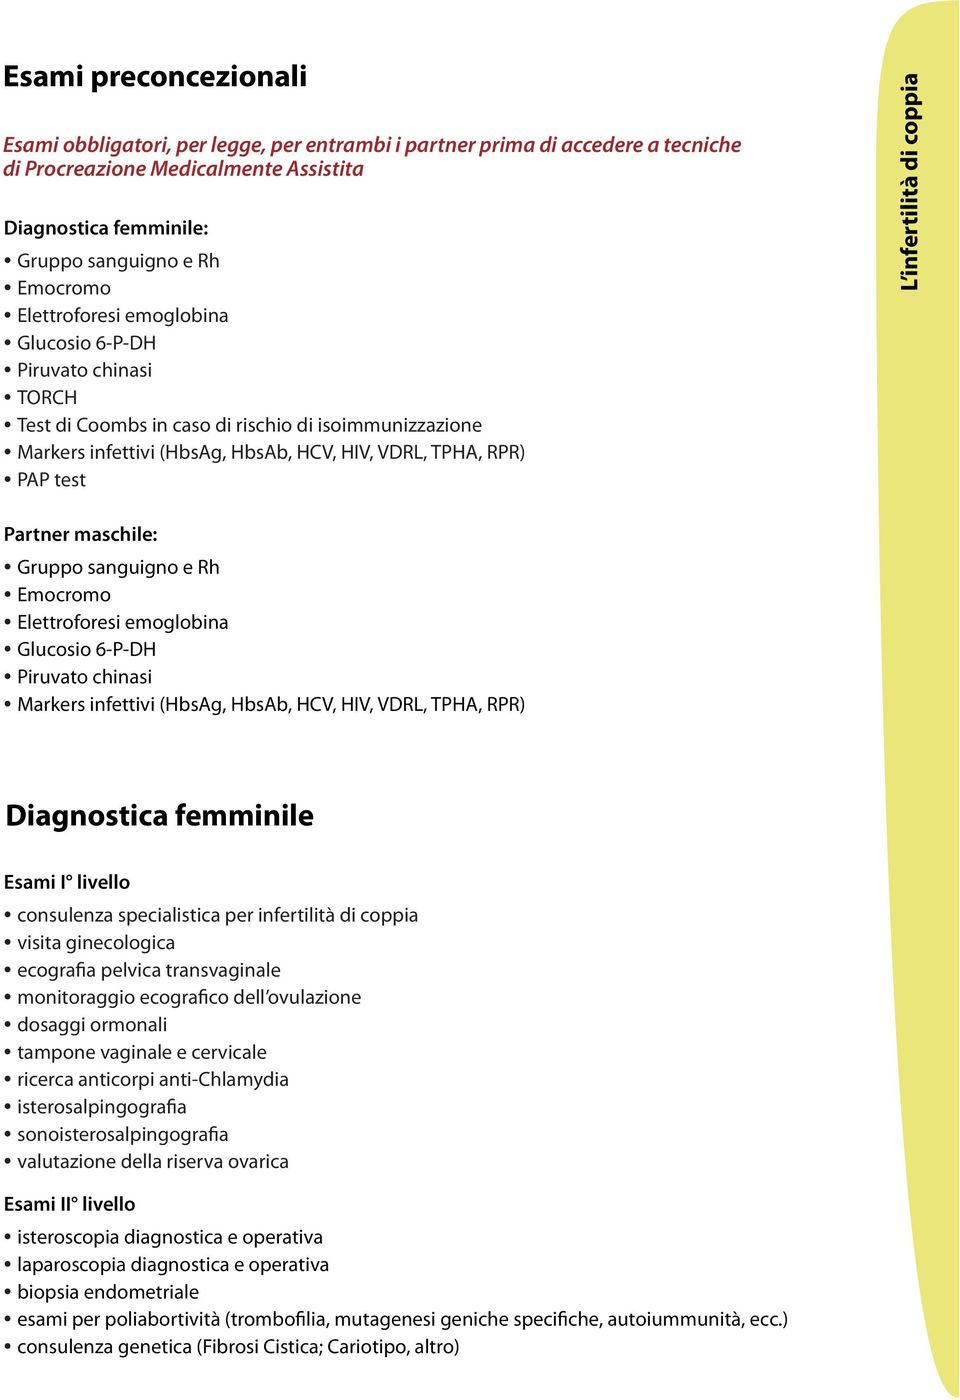 infertilità di coppia Partner maschile: Gruppo sanguigno e Rh Emocromo Elettroforesi emoglobina Glucosio 6-P-DH Piruvato chinasi Markers infettivi (HbsAg, HbsAb, HCV, HIV, VDRL, TPHA, RPR)